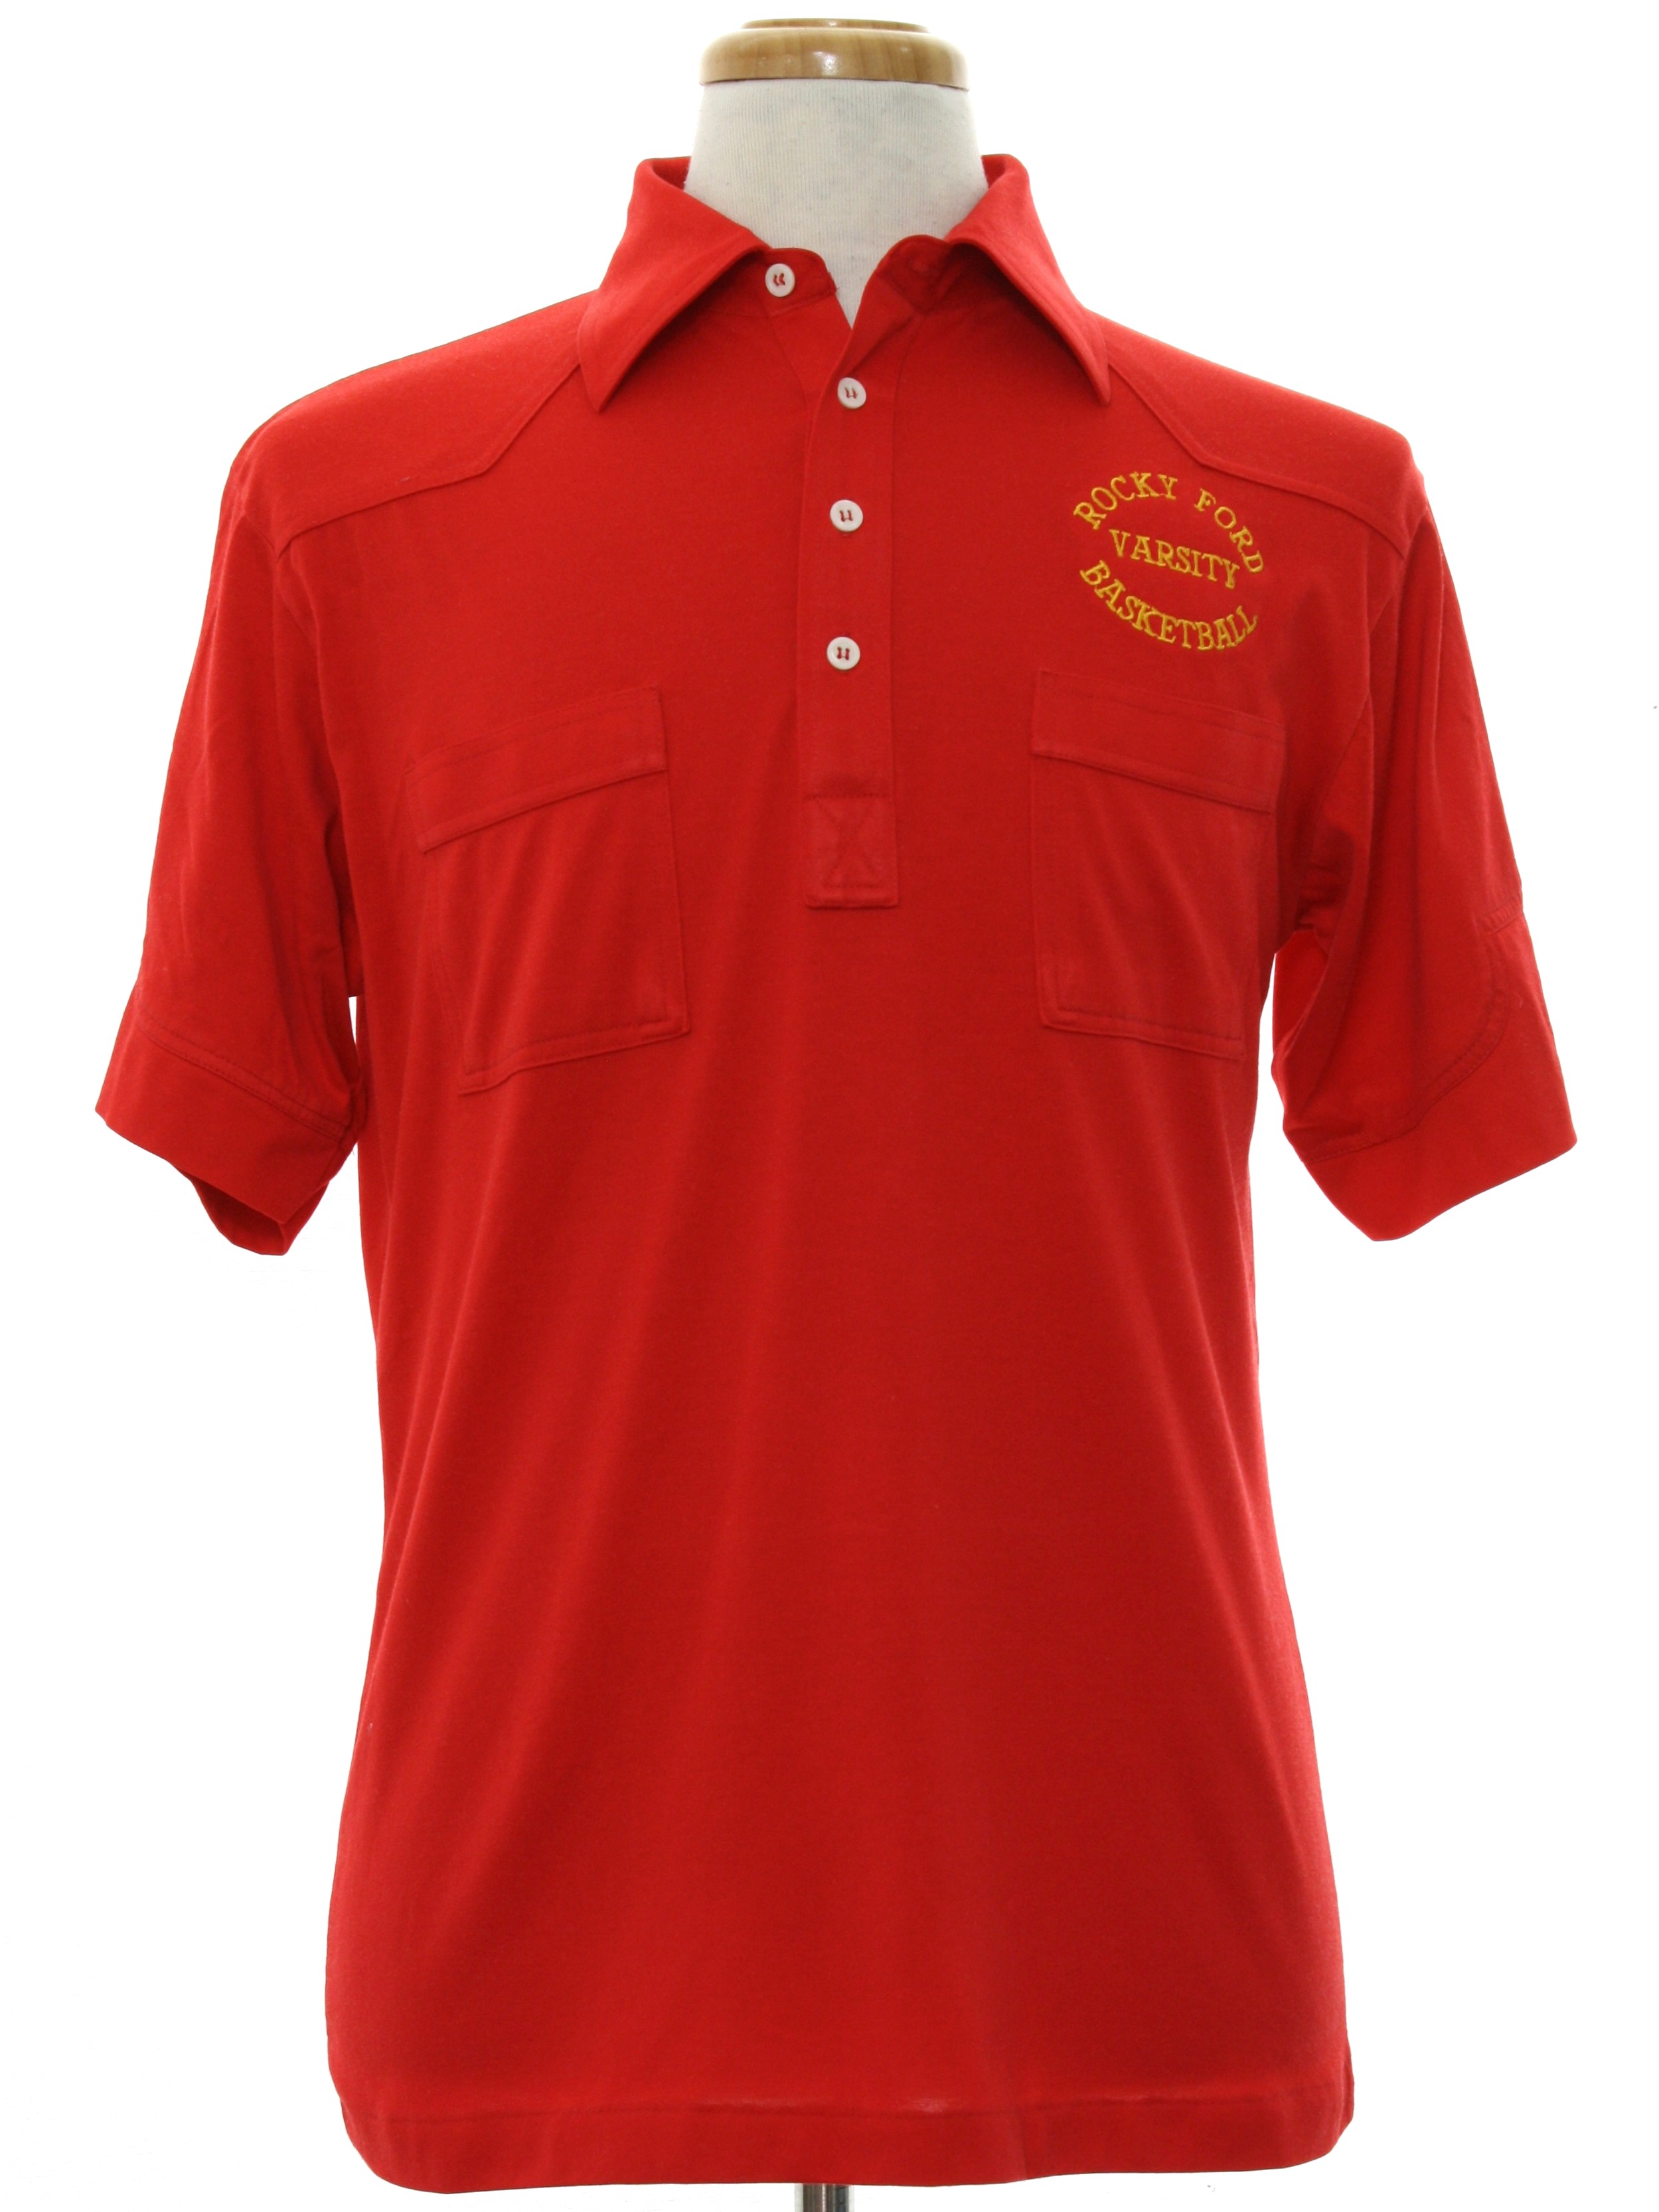 1980's Vintage Nologo Shirt: 80s -Nologo- Mens red background cotton polyester jersey short 